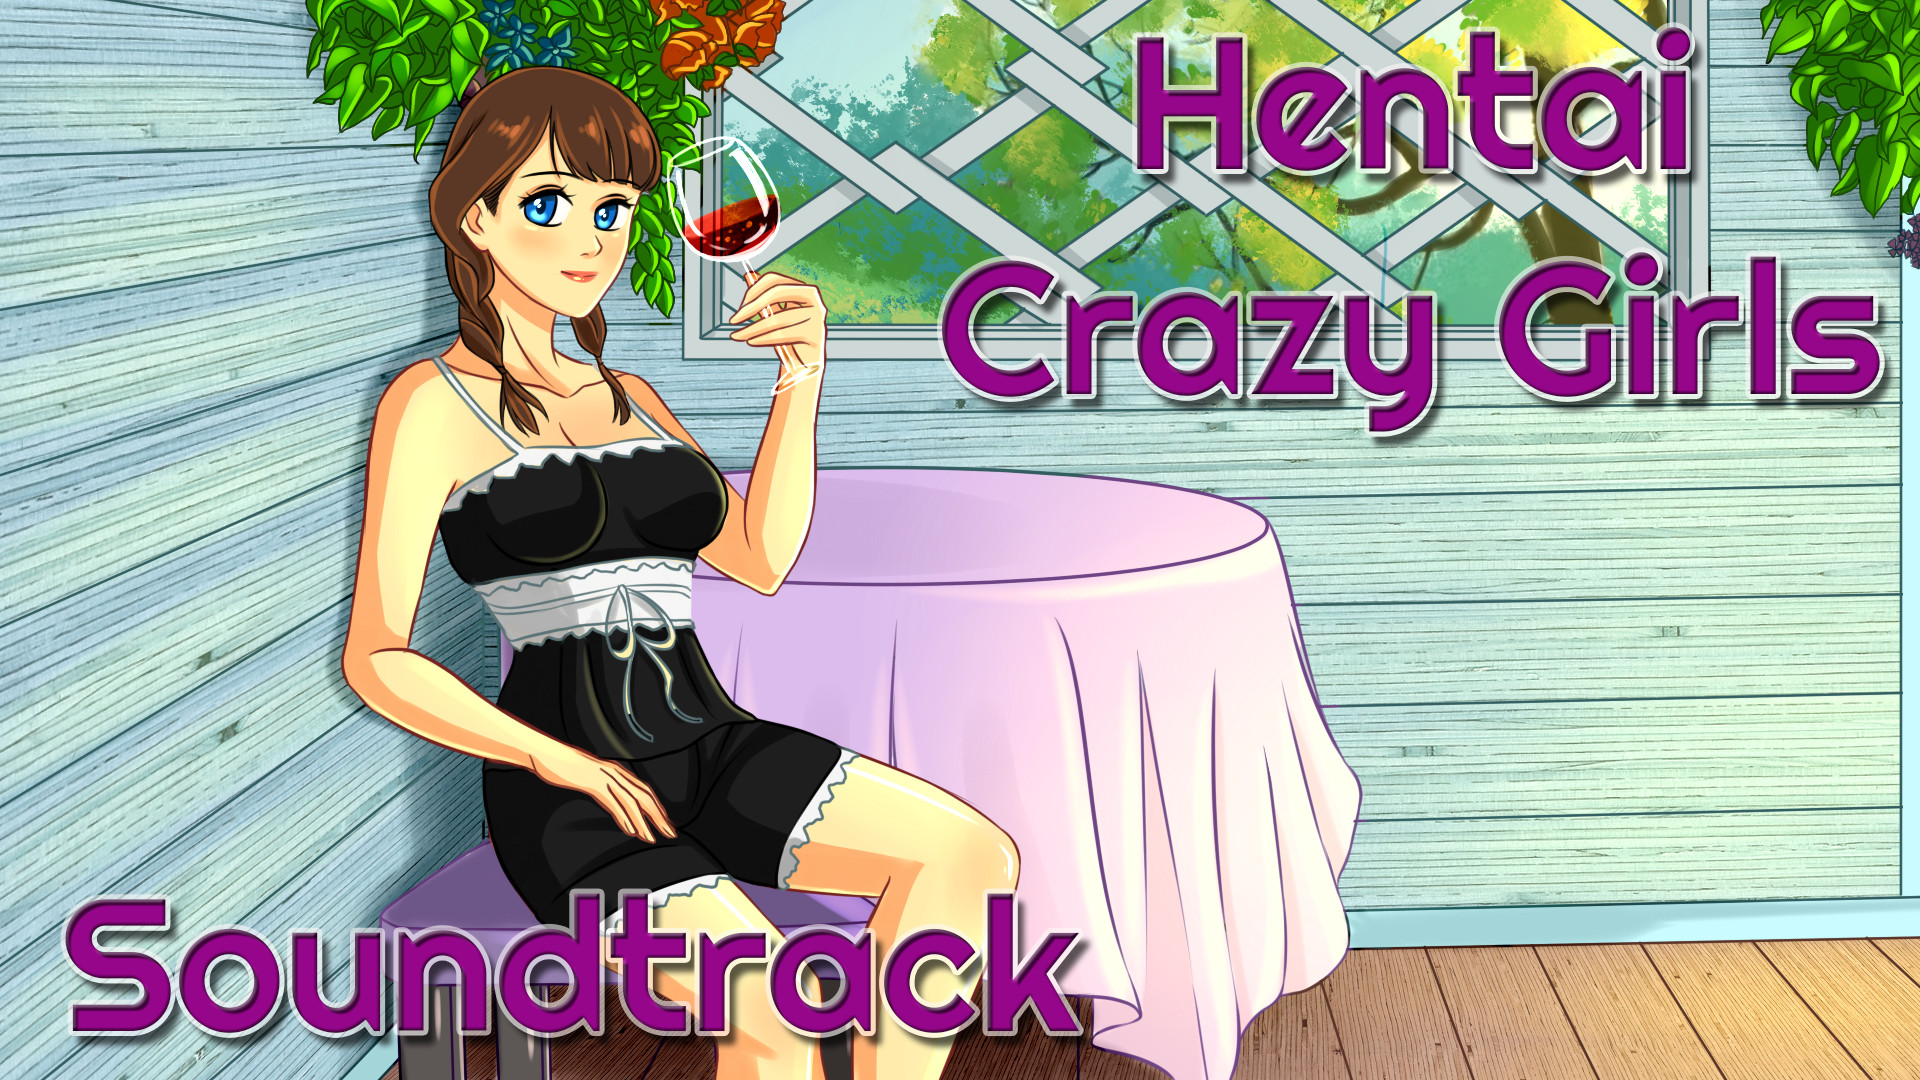 Hentai Crazy Girls Soundtrack Steambase 